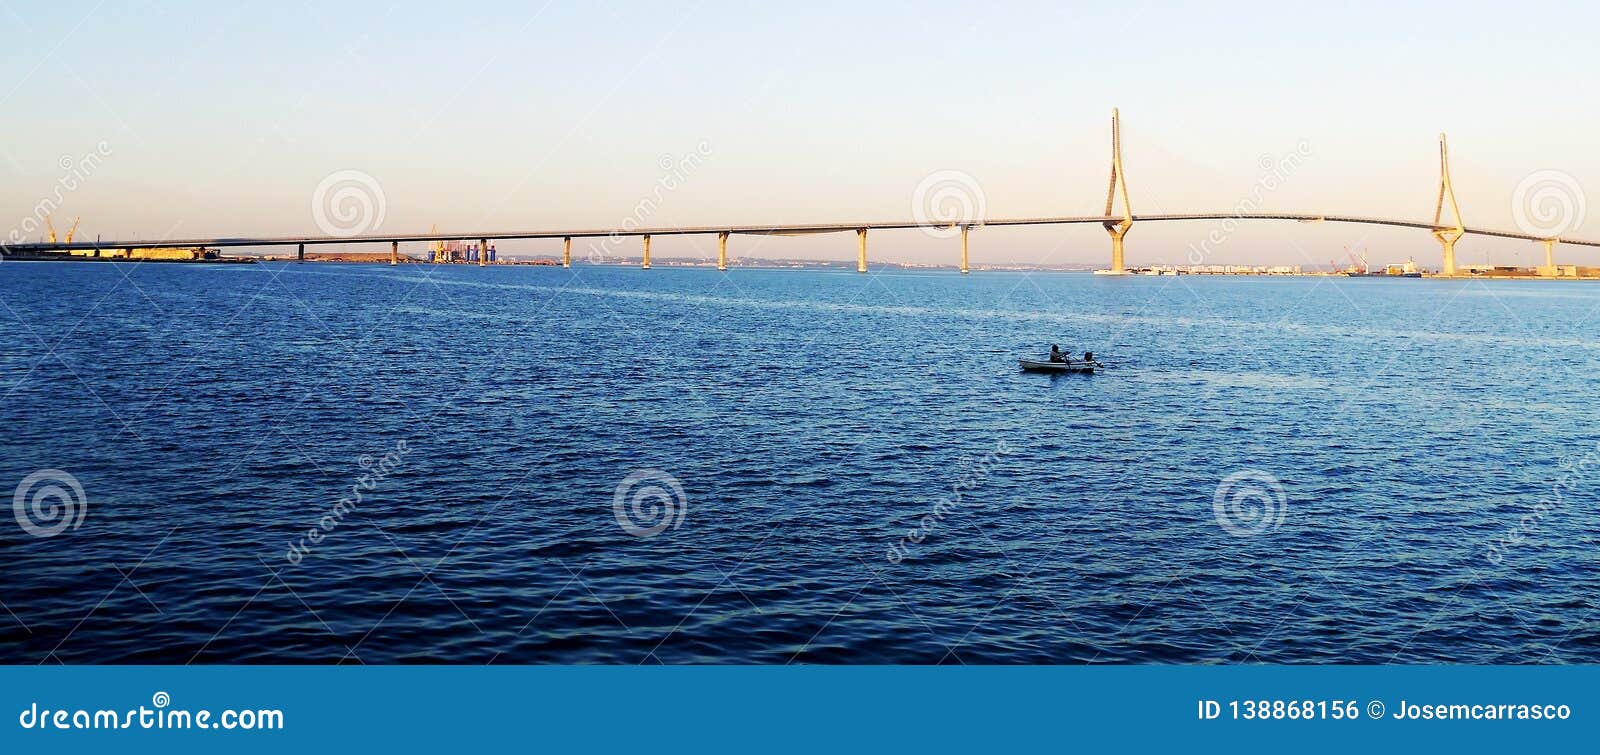 fishing boats in sunset at the puente de la constituciÃÂ³n, called la pepa, in the bay of cÃÂ¡diz, andalusia. spain